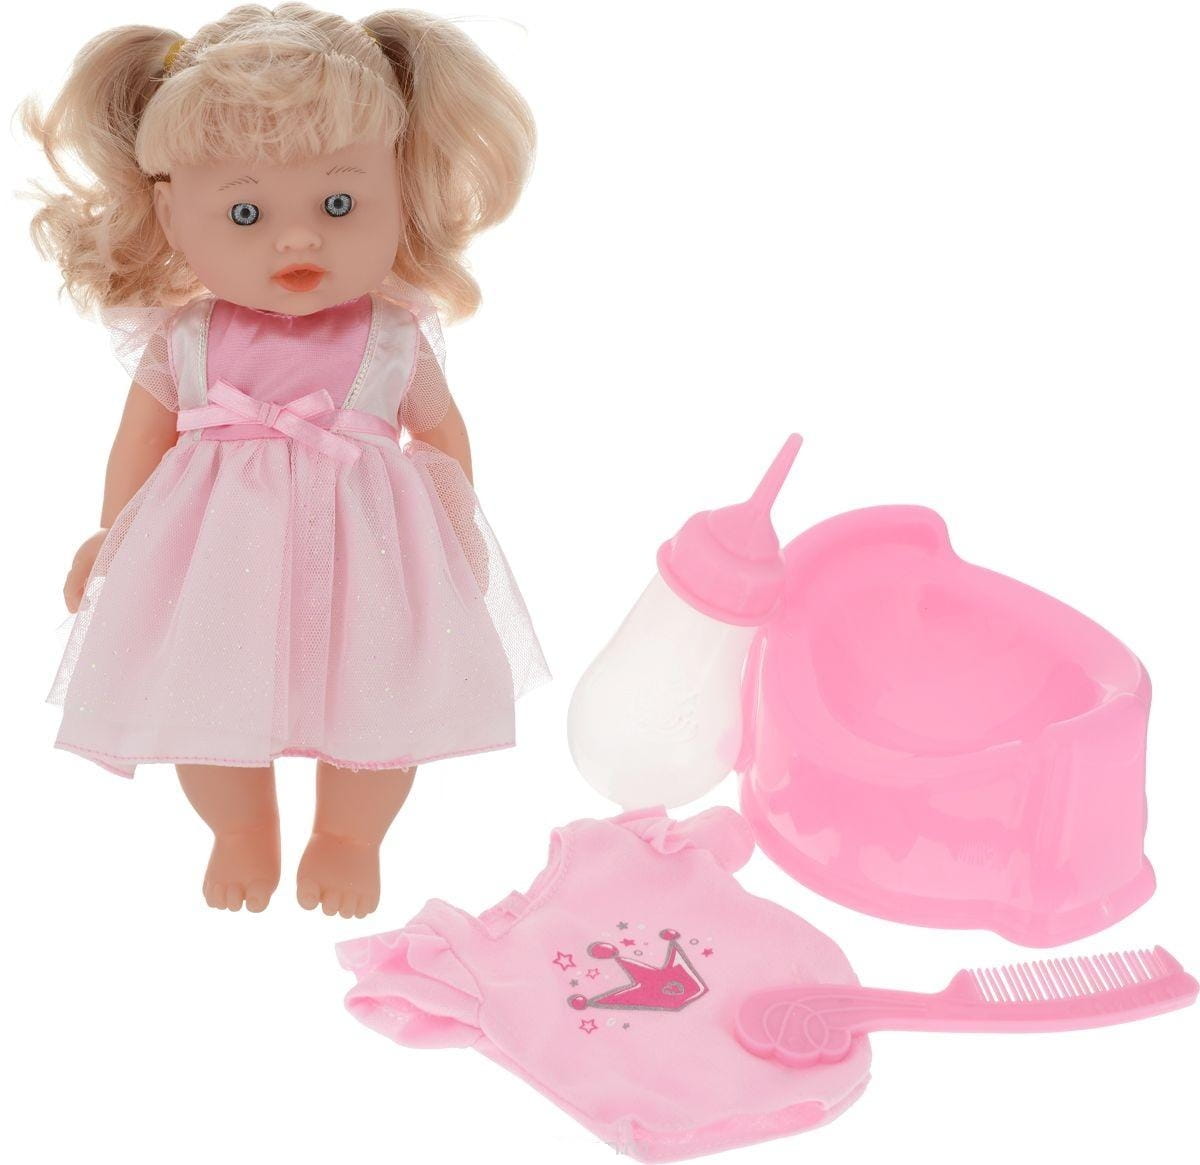 Кукла MARY POPPINS Лизи - Приучаемся к горшку (в розовом наряде)